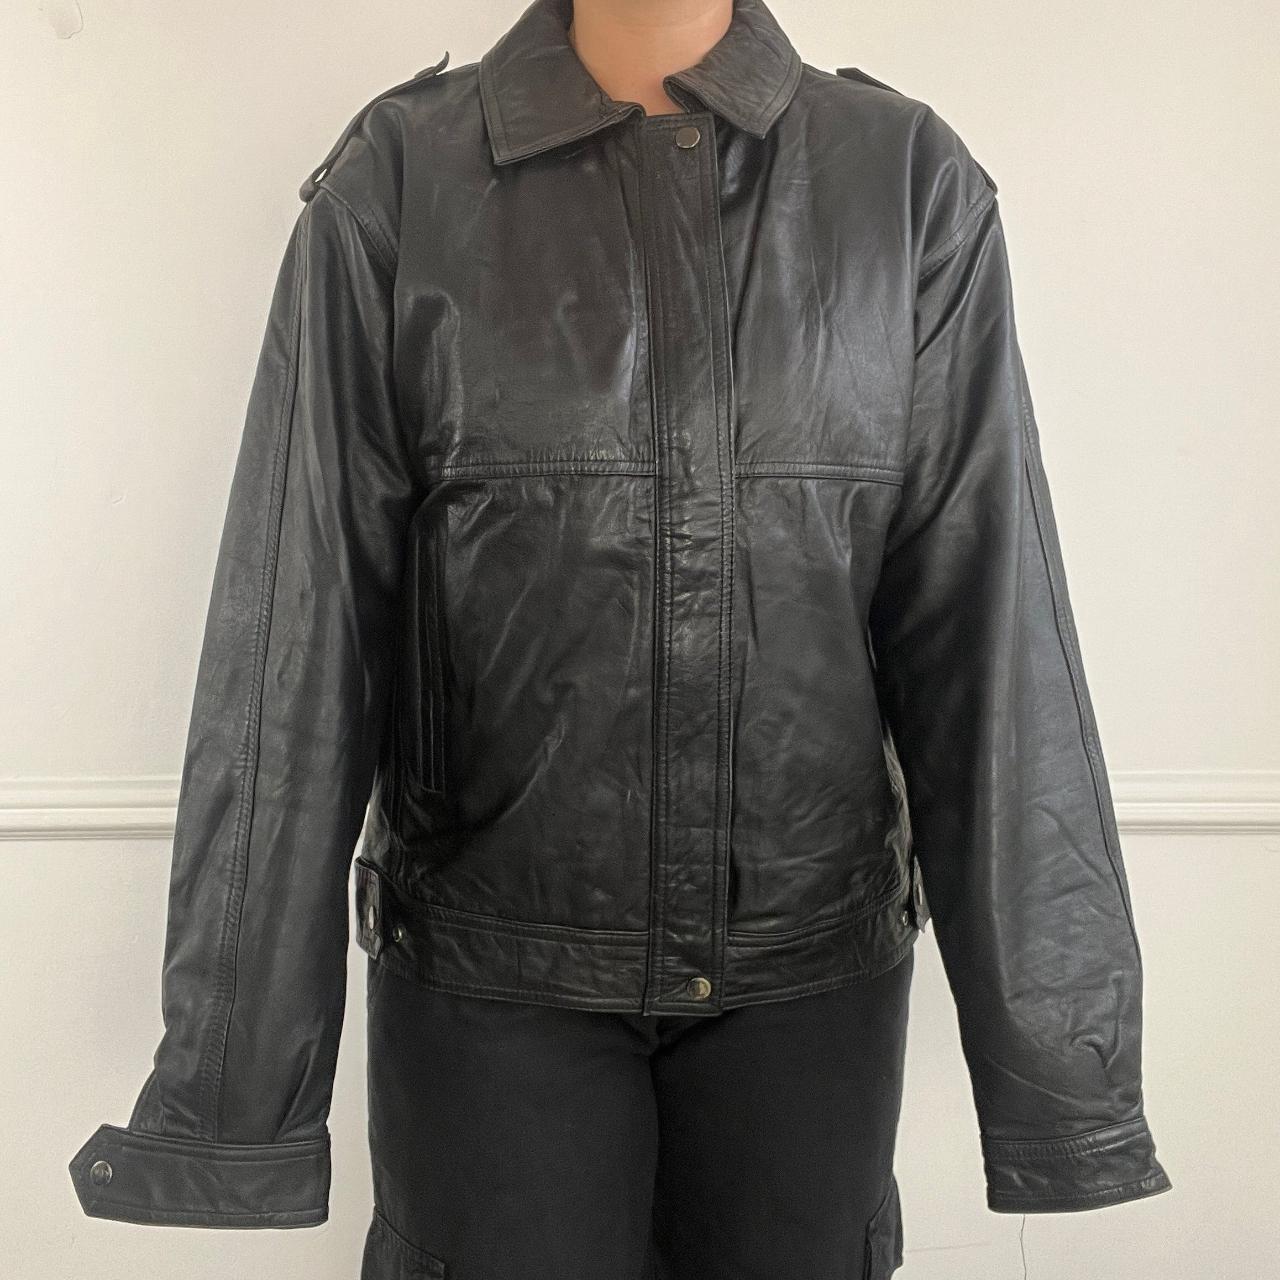 Black leather jacket amazing 00s/y2k black vintage... - Depop